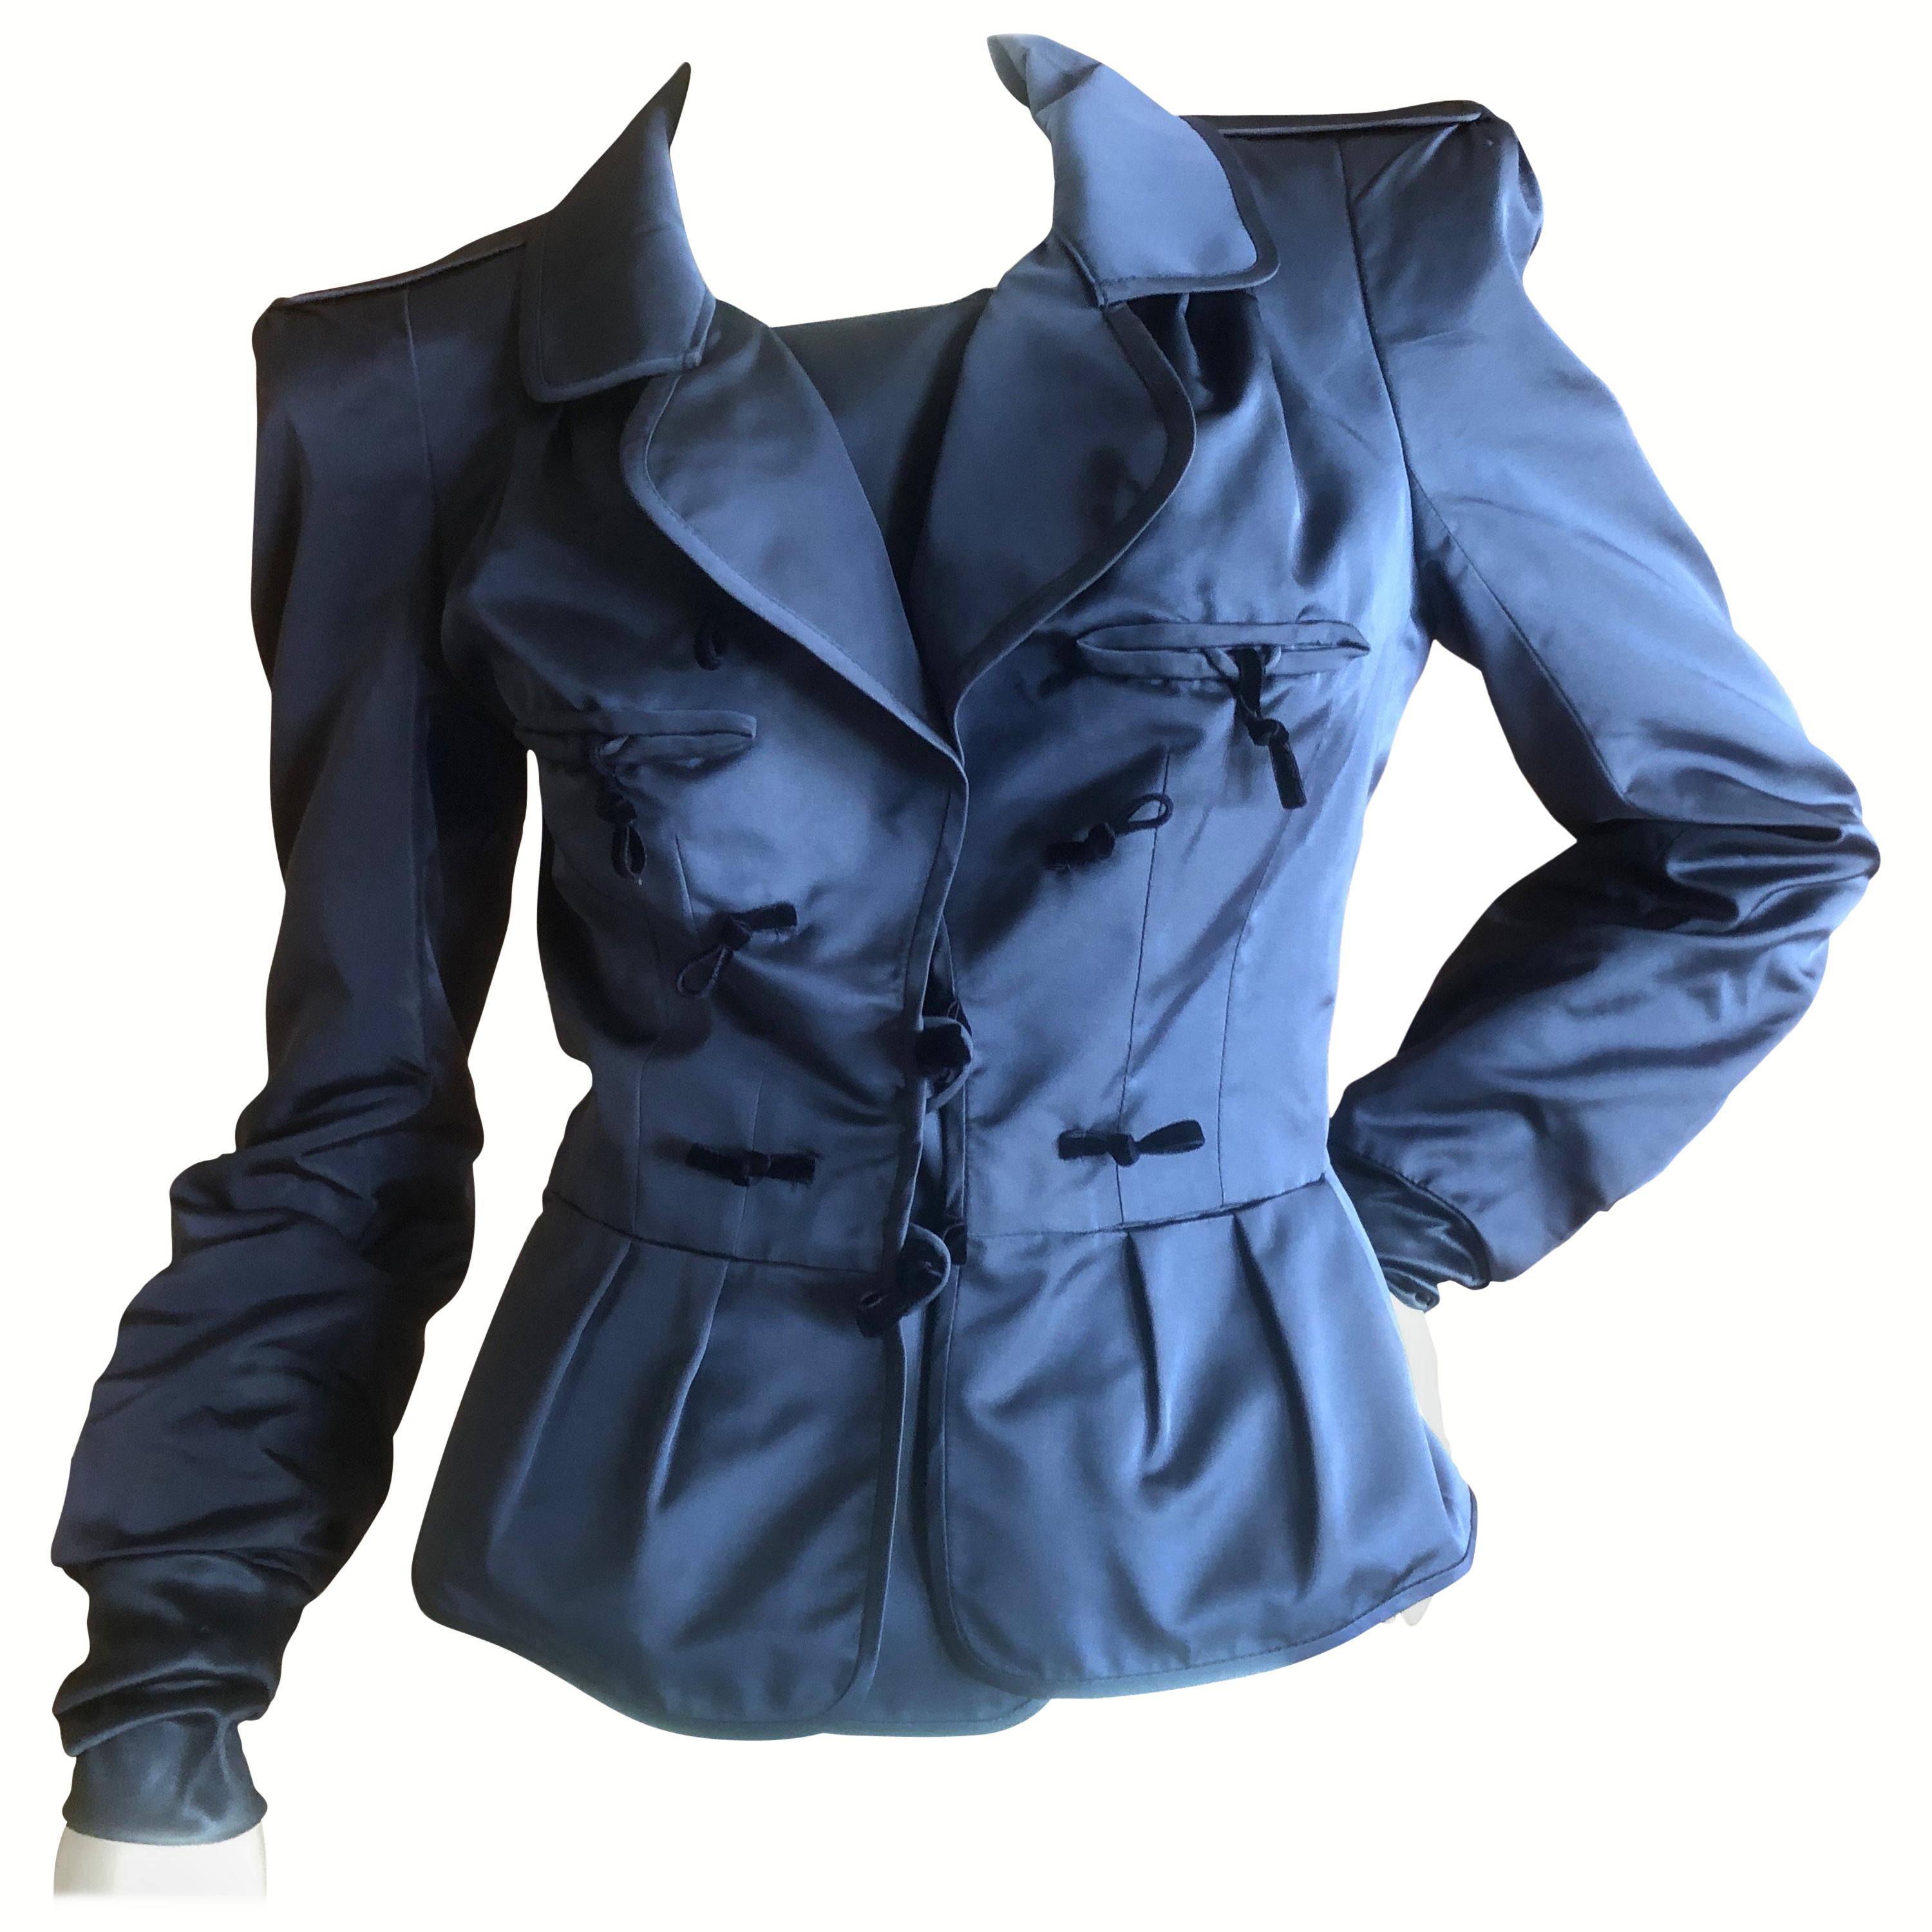 Yves Saint Laurent Tom Ford Fall 2004 Teal Blue Silk Pagoda Shoulder Jacket For Sale